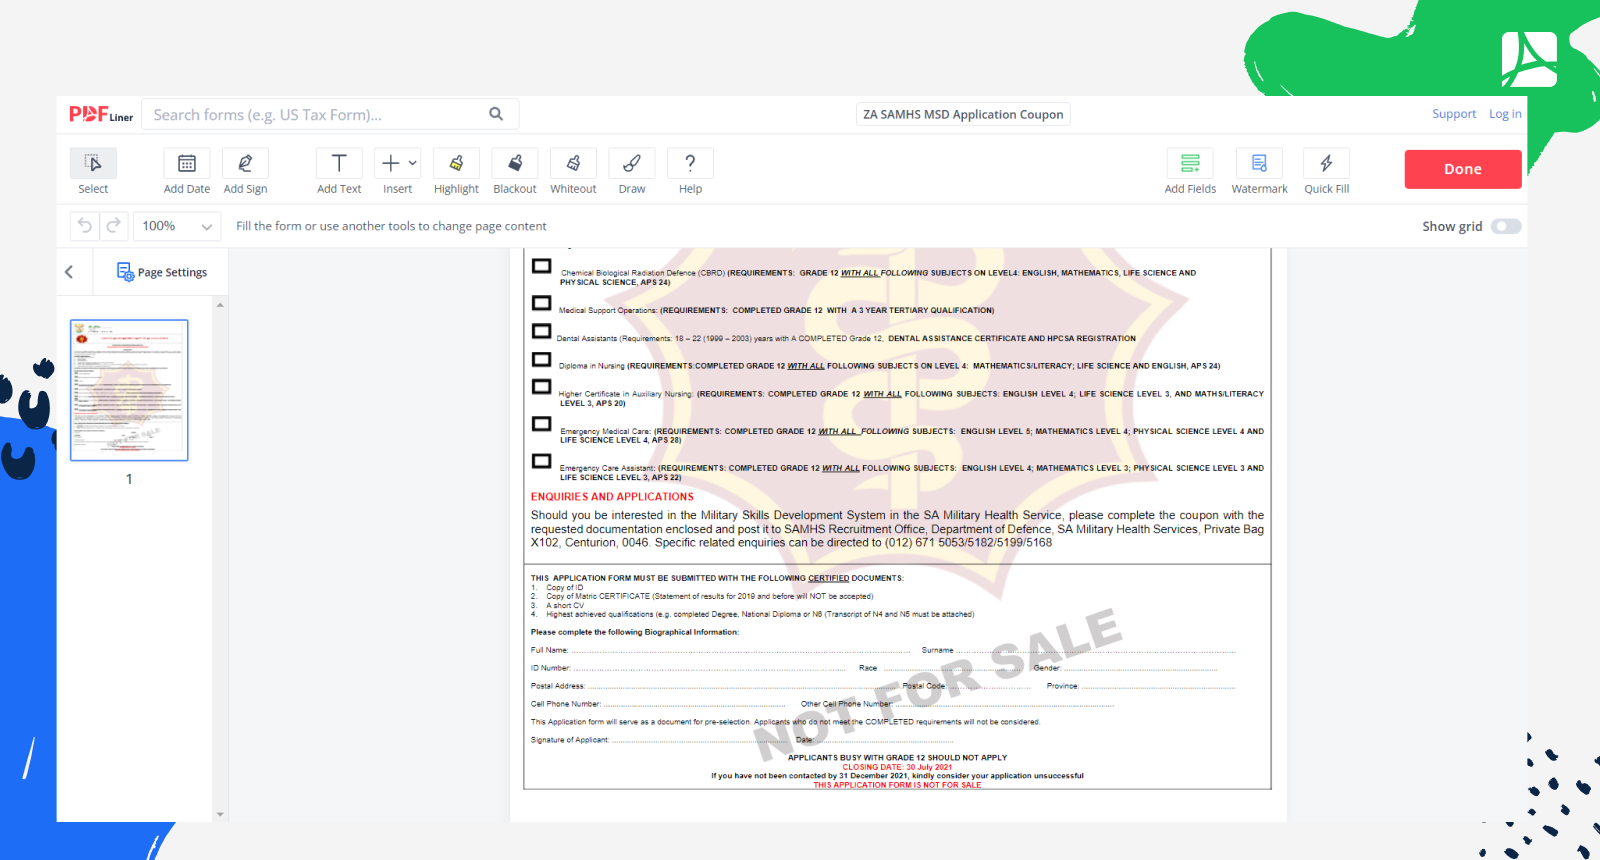 ZA SAMHS MSD Application Coupon Form Screenshot 2